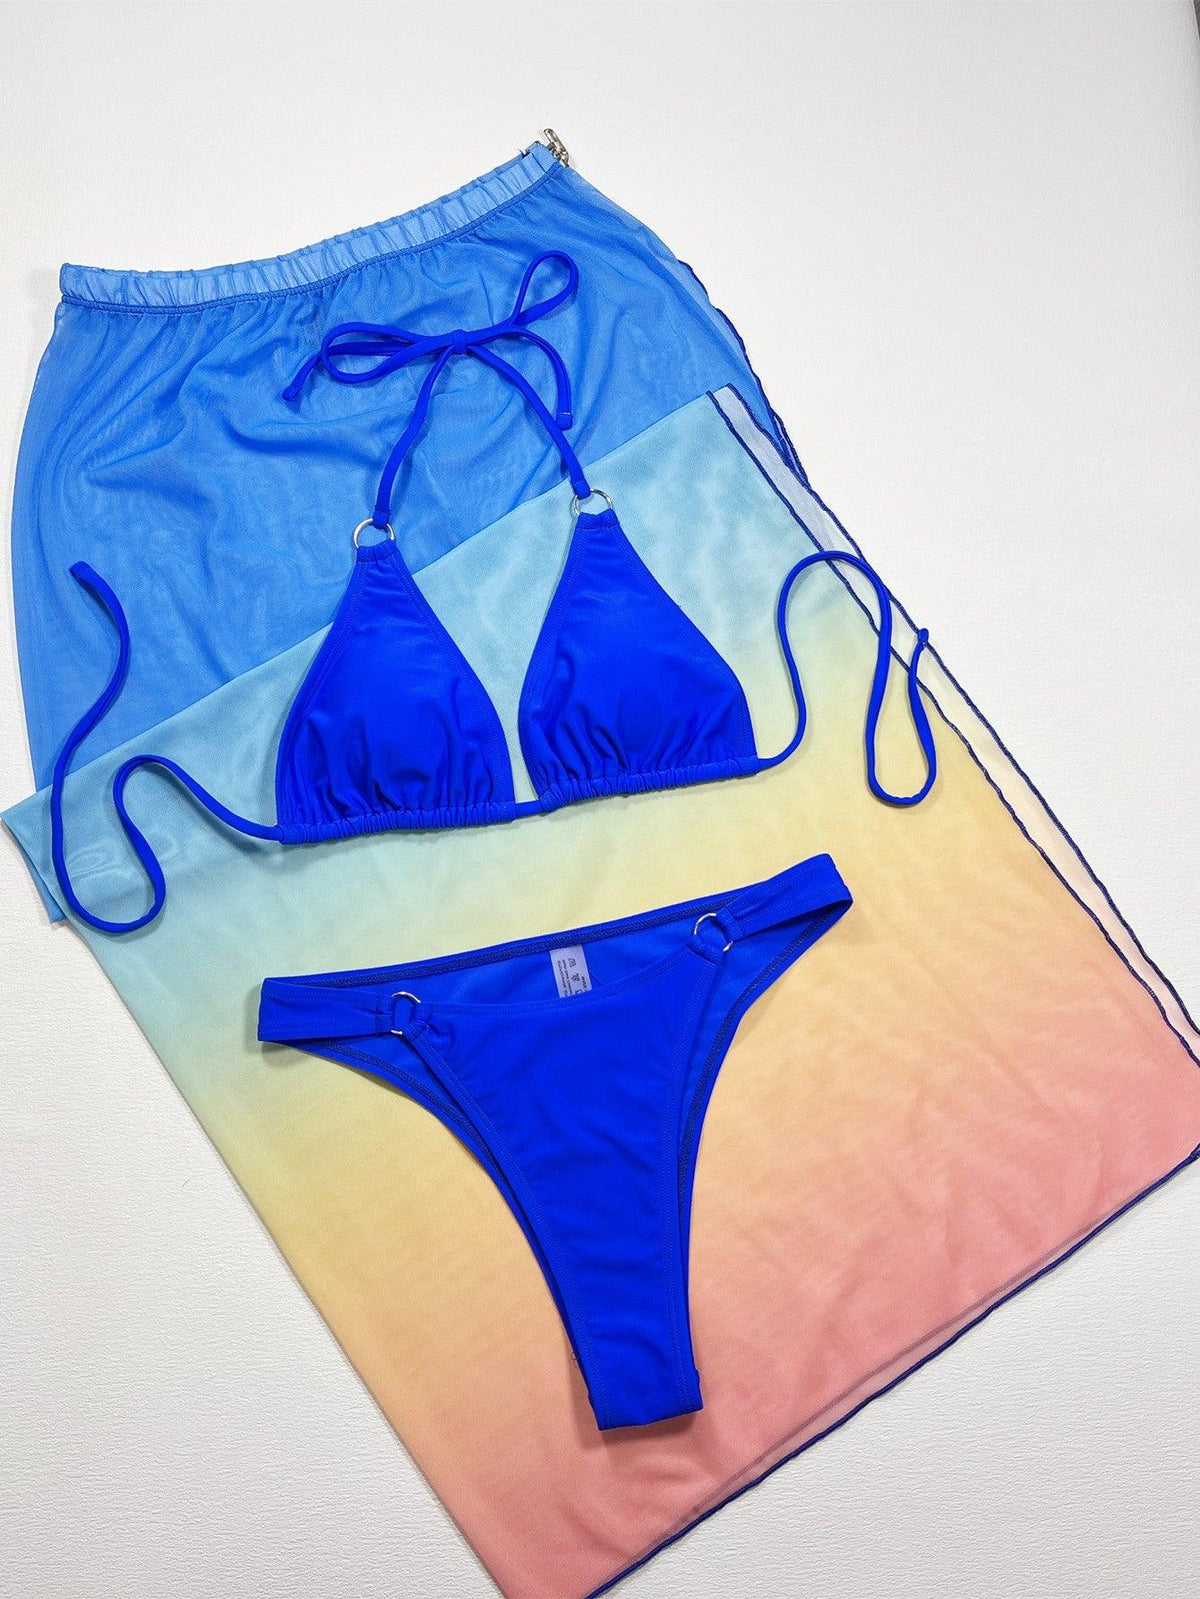 Women's Sexy Three-Piece Bikini Set with Cover Up - Royal Blue Swimwear for Beach & Pool - GFIT SPORTS